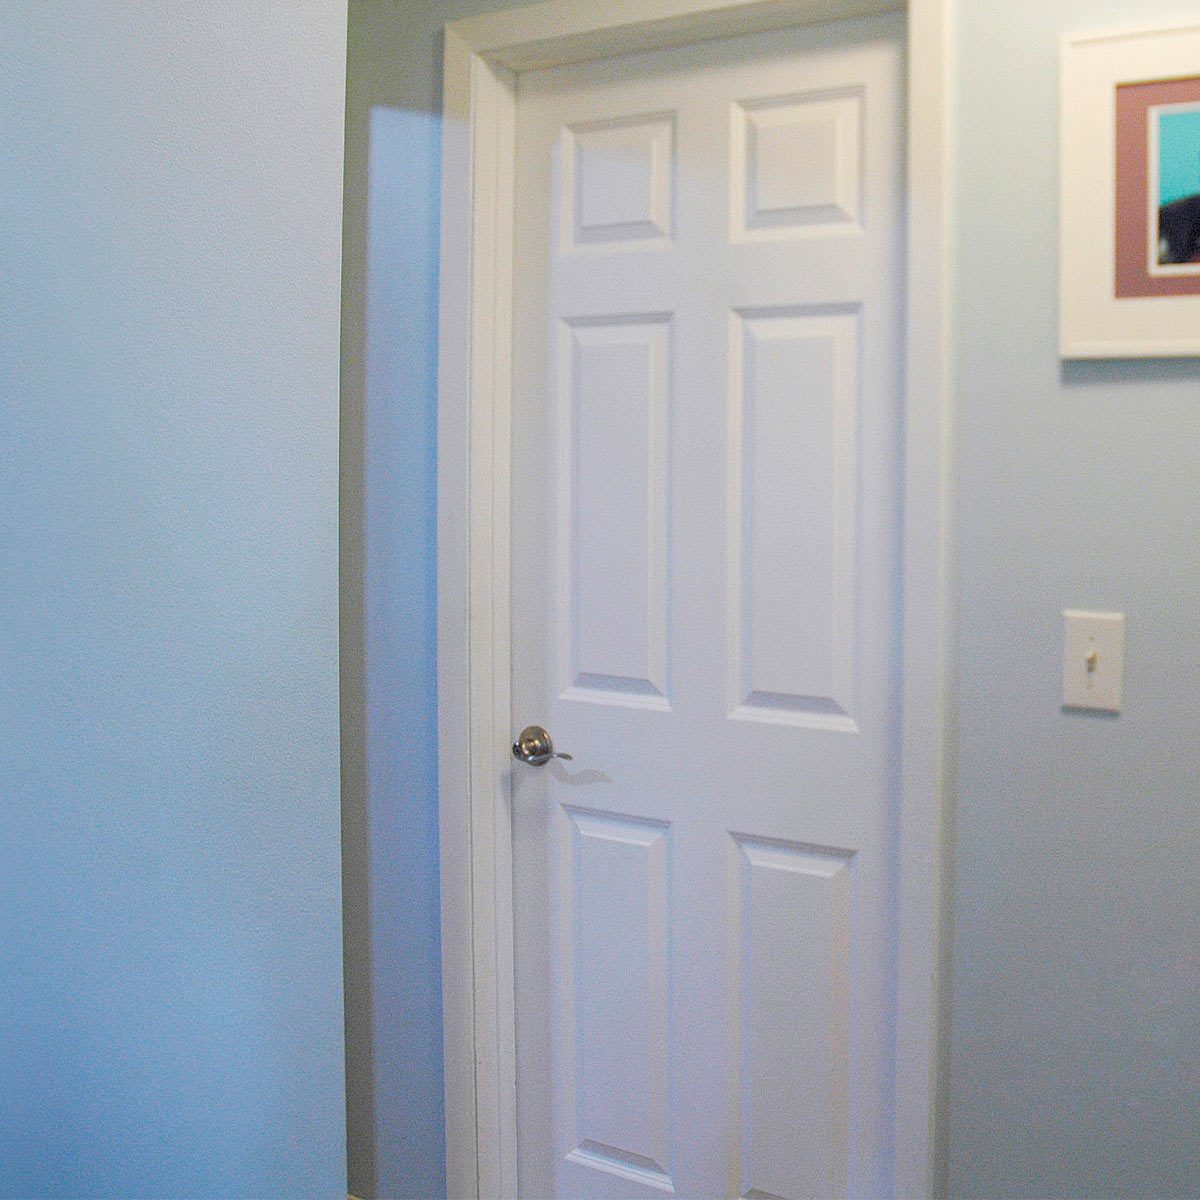 How To Replace an Interior Door